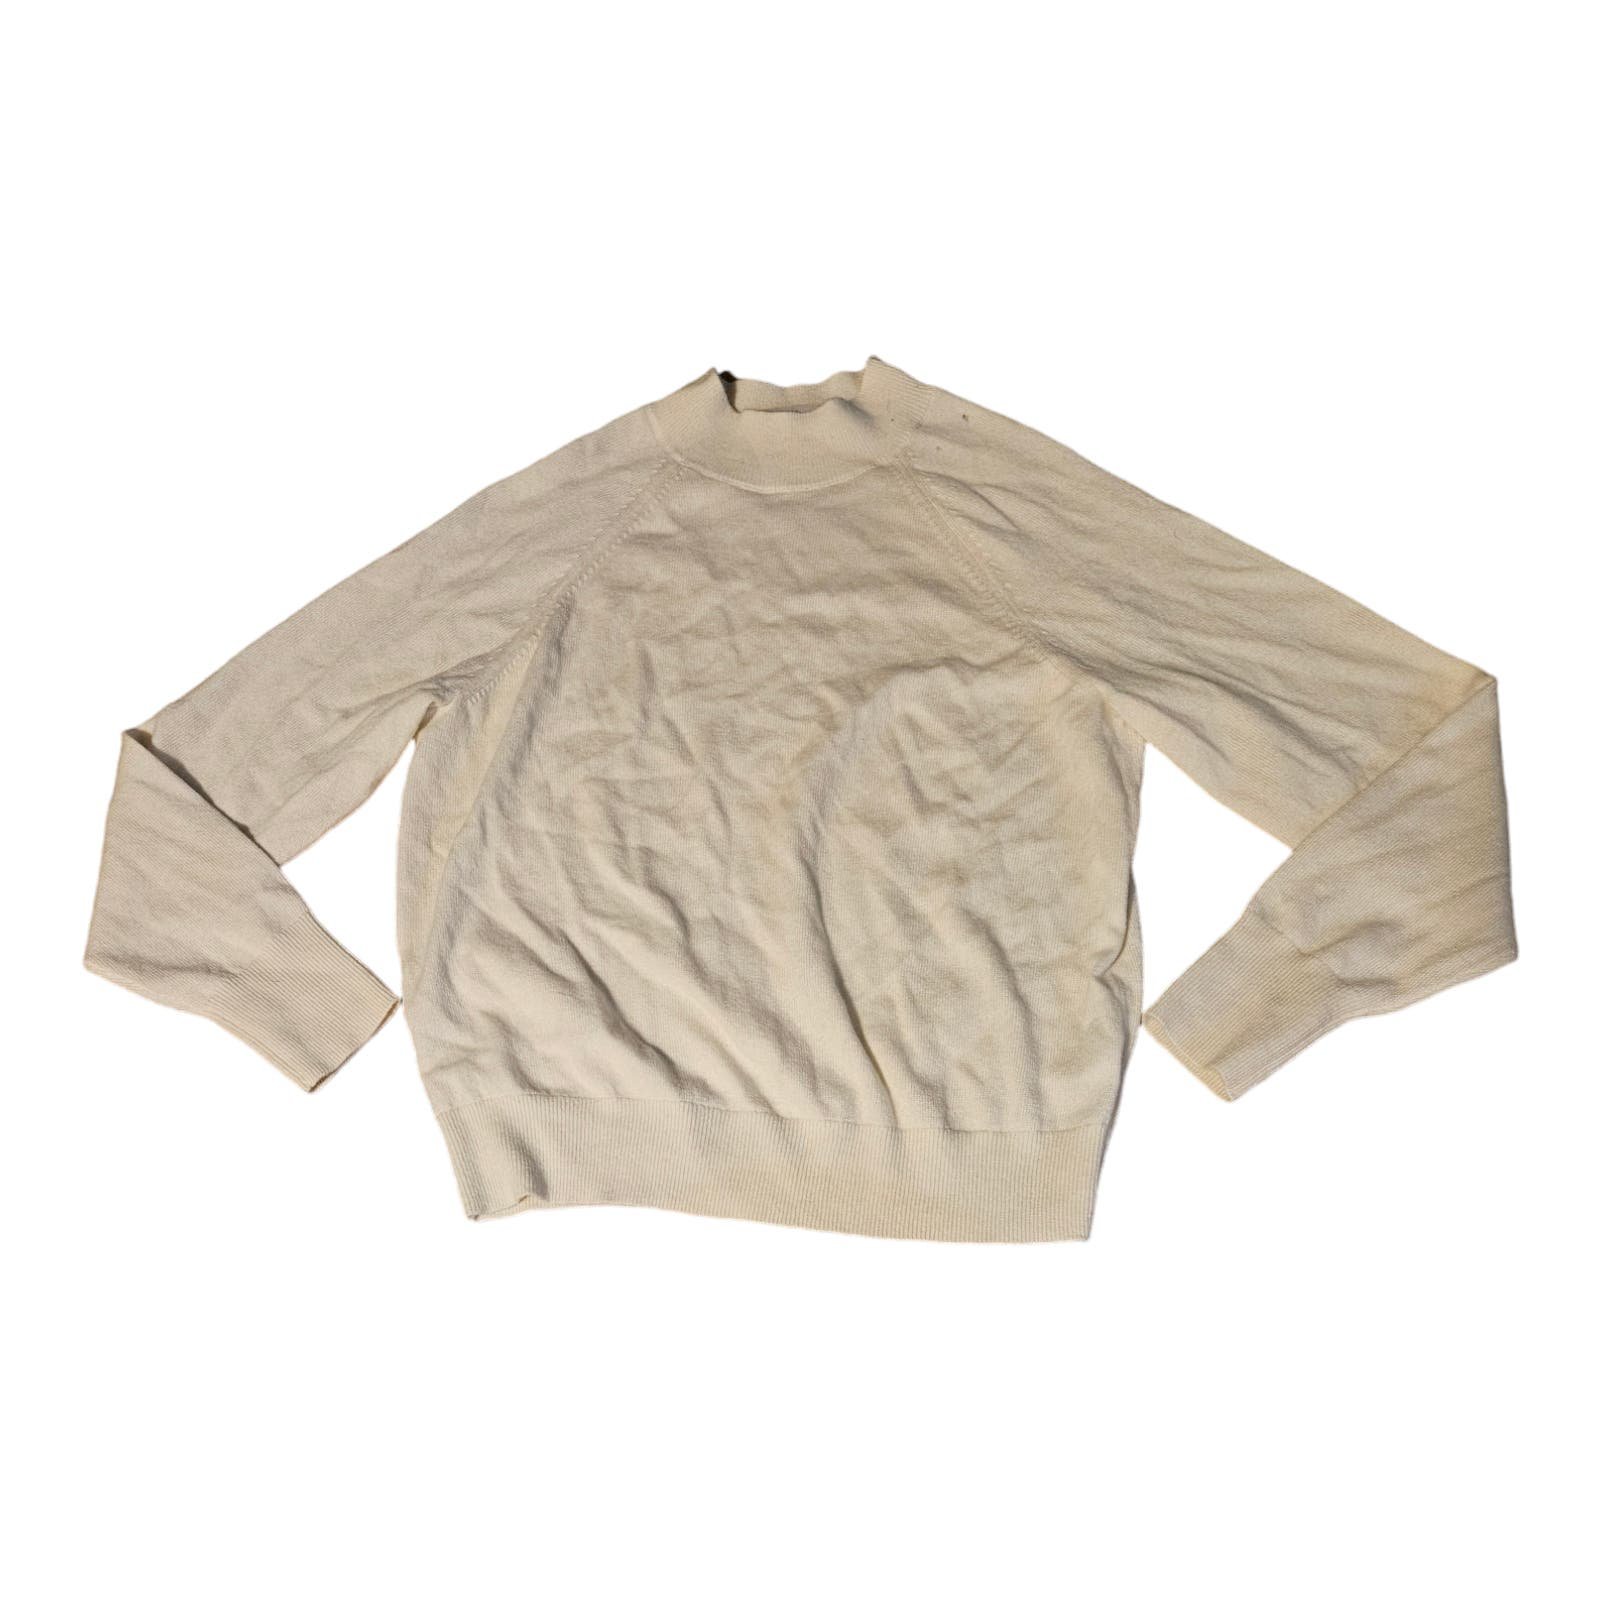 Everlane Medium White Long Sleeve Pullover Knit Sweater